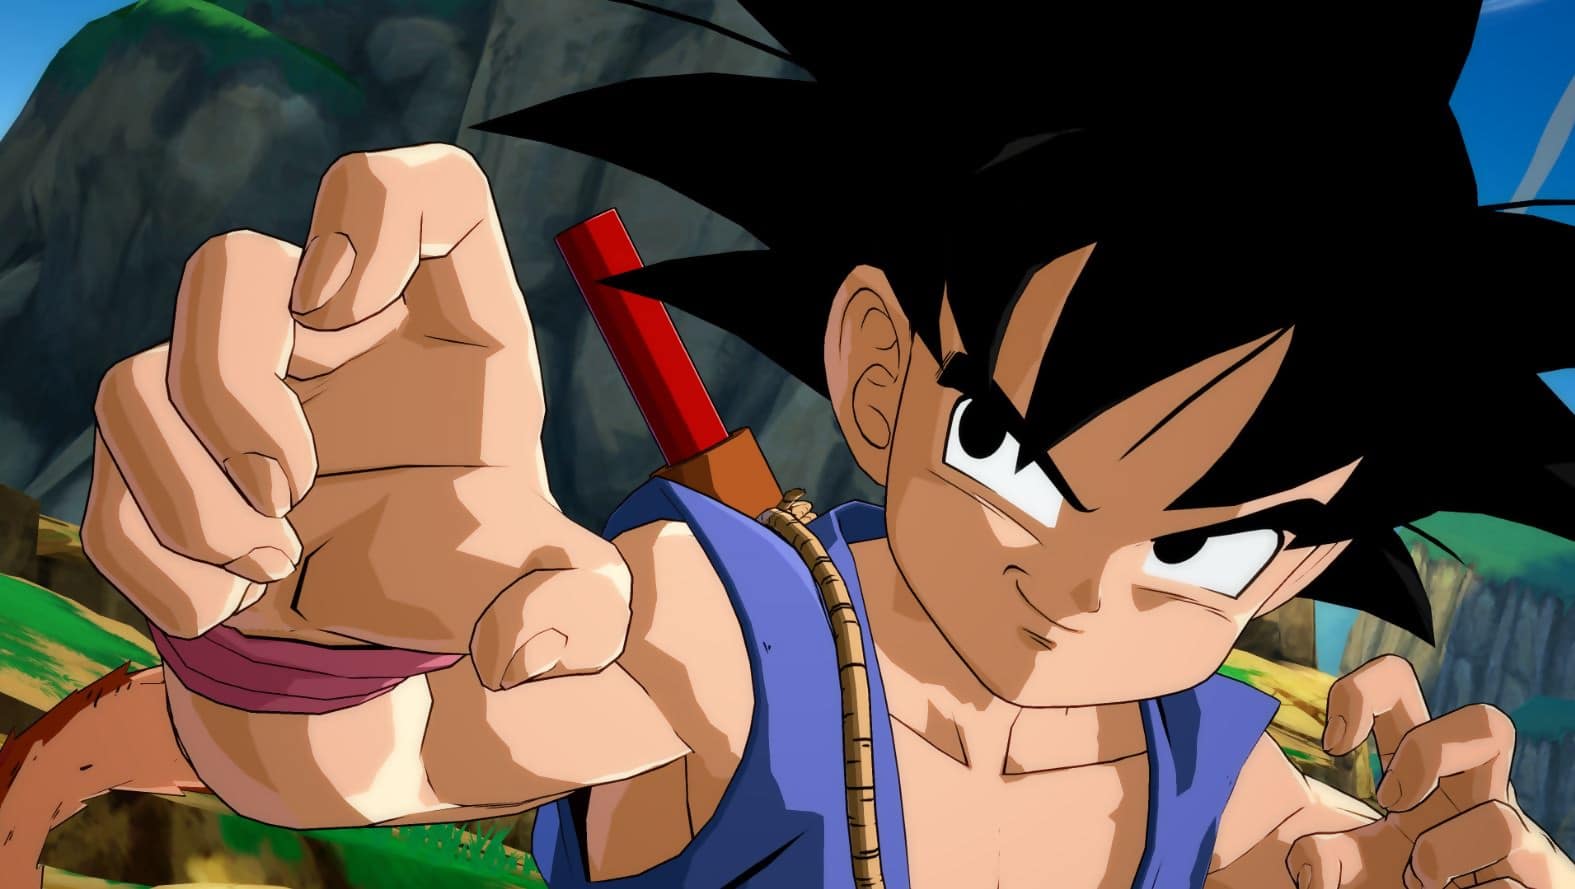 Another Goku  joins GokuFighterZ Battle of Goku